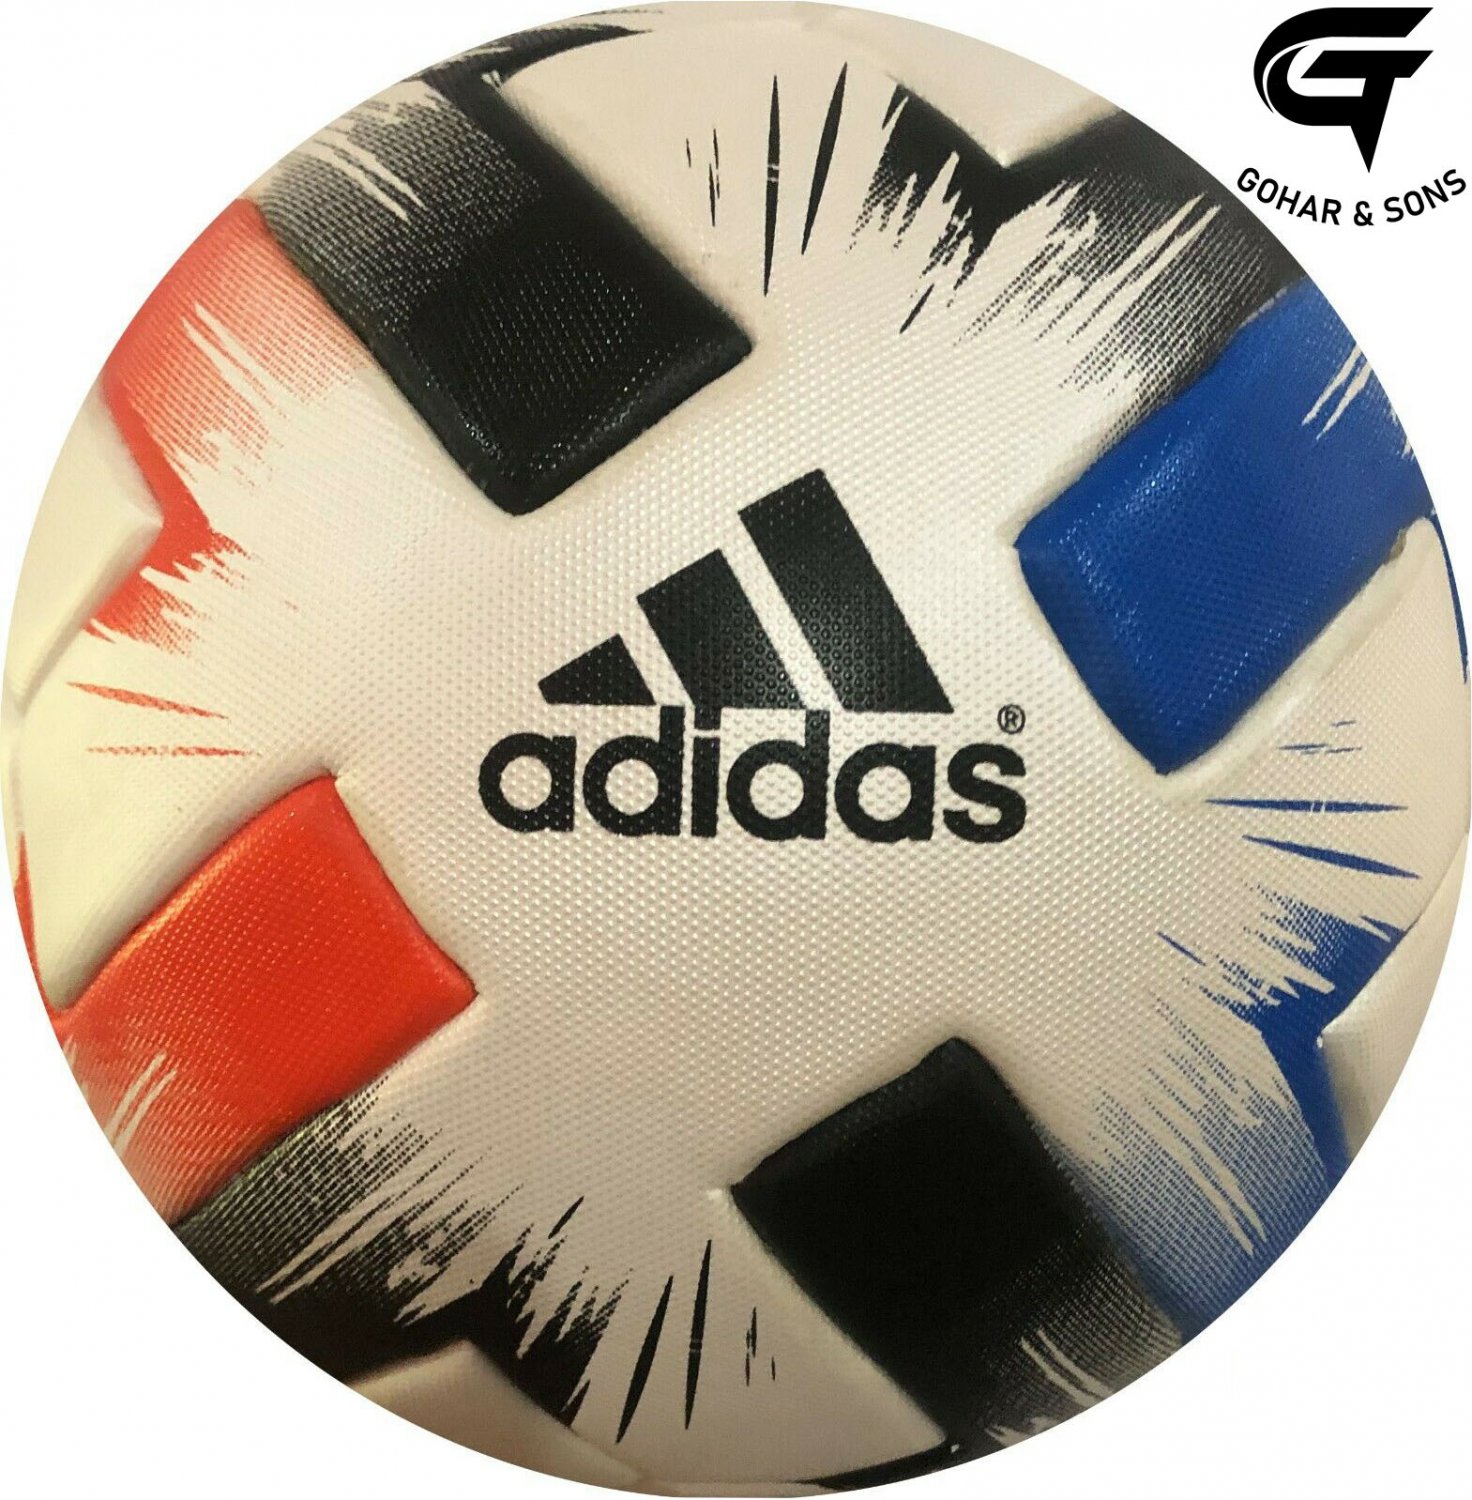 Adidas TSUBASA Captain Soccer Match Ball Size 5 Thermal Bonded Football